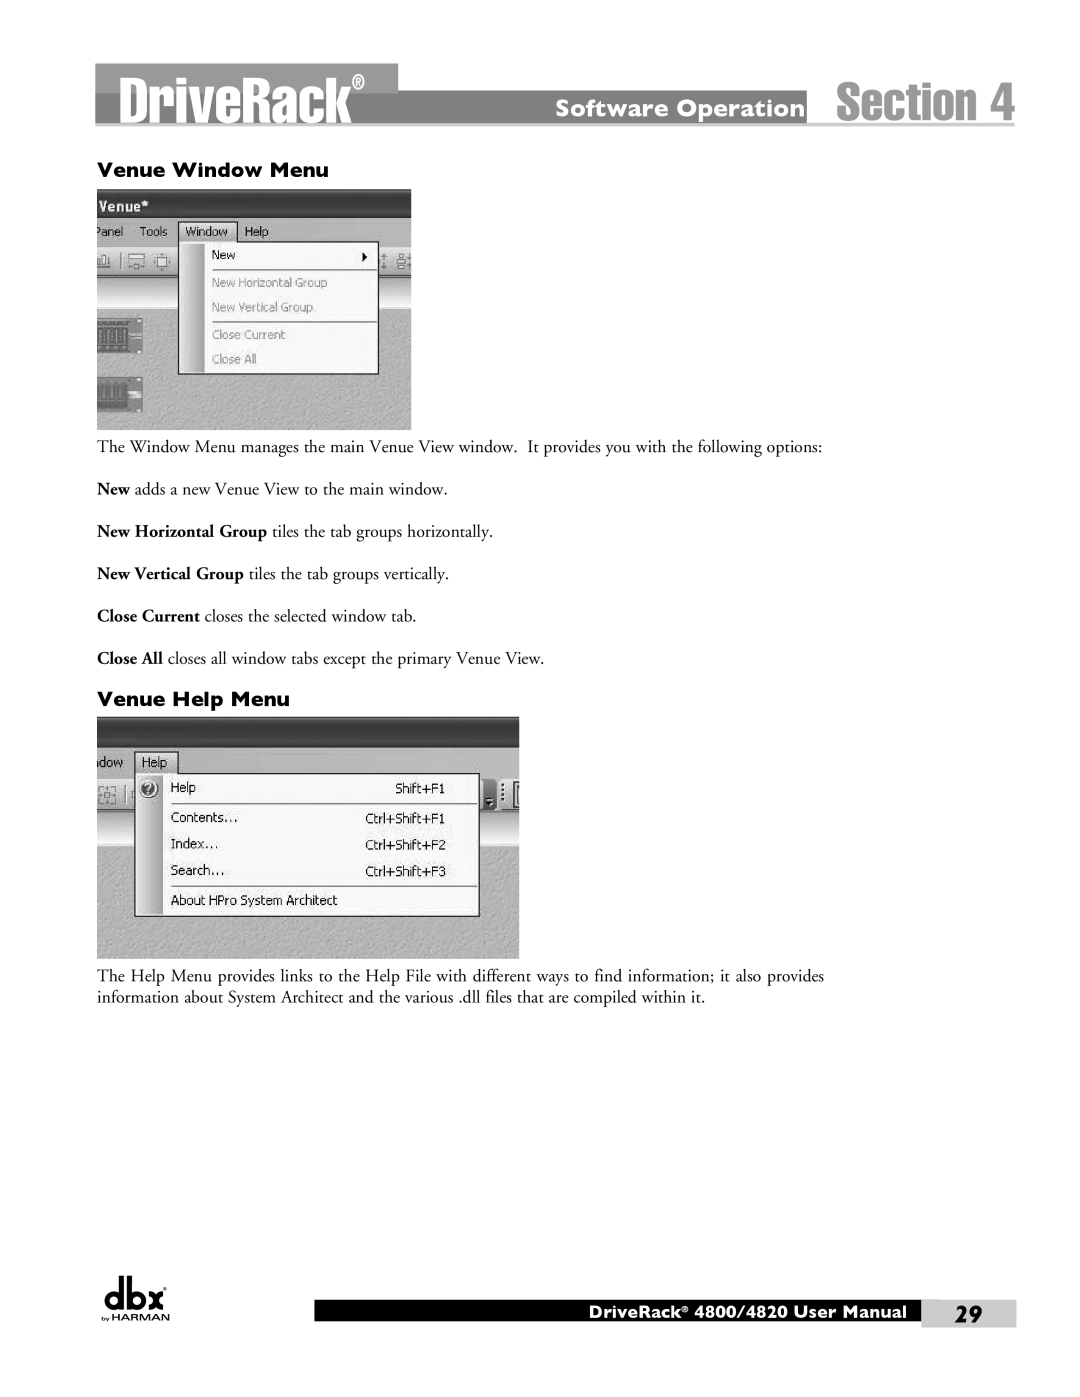 Harman user manual Section, Software Operation, Venue Window Menu, Venue Help Menu, DriveRack 4800/4820 User Manual 